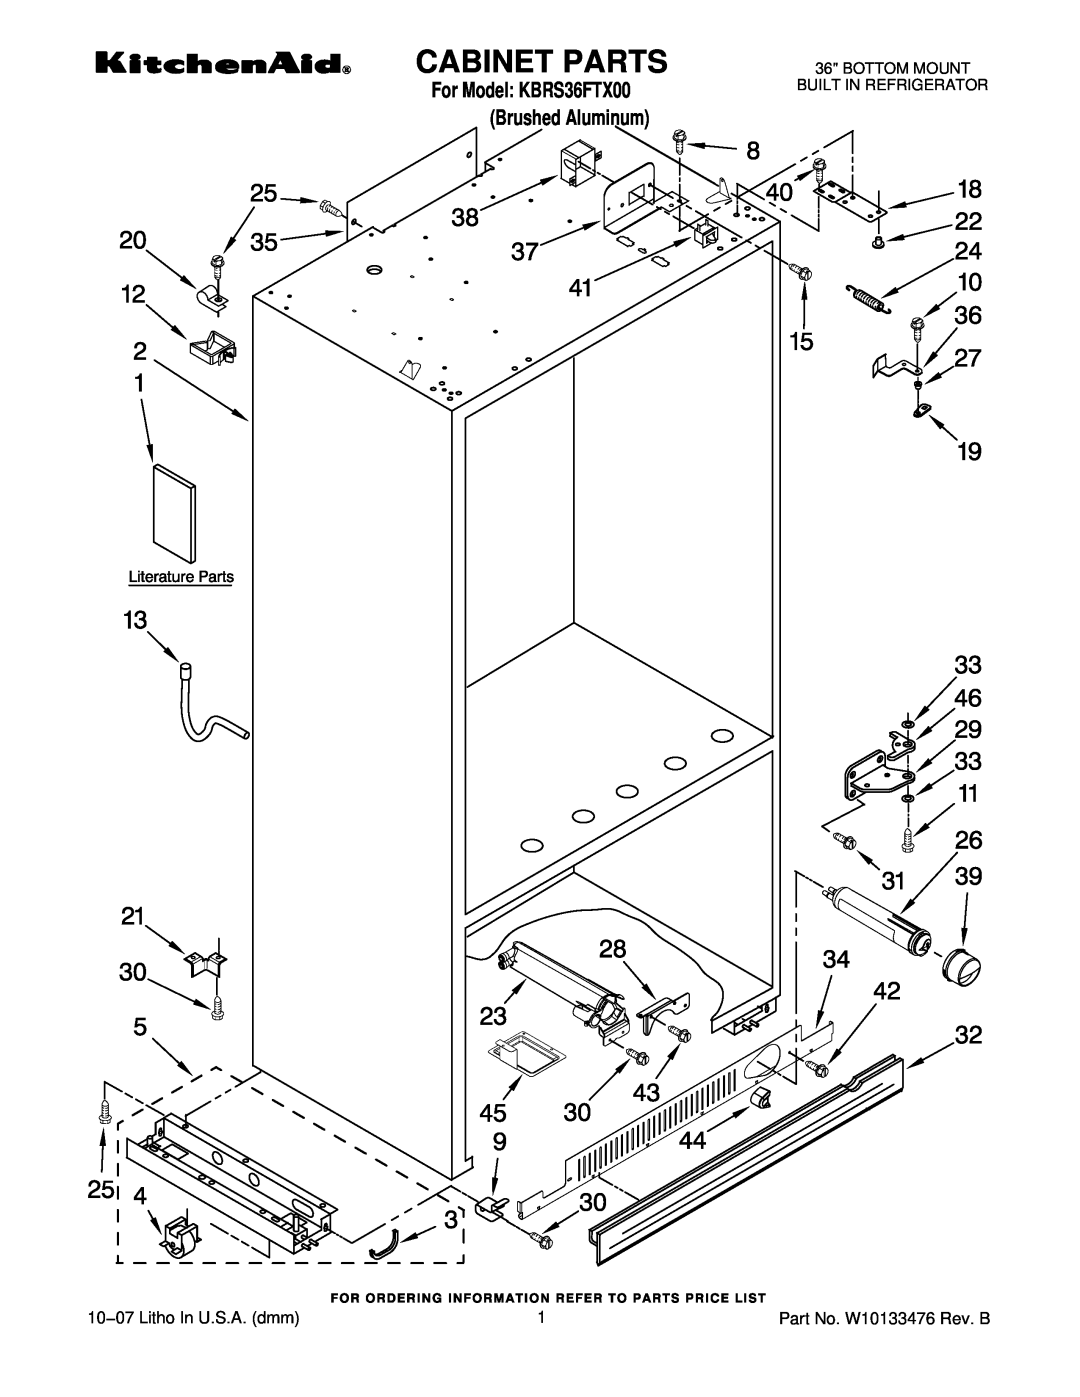 KitchenAid manual Cabinet Parts, 10−07 Litho In U.S.A. dmm, For Model KBRS36FTX00 Brushed Aluminum 